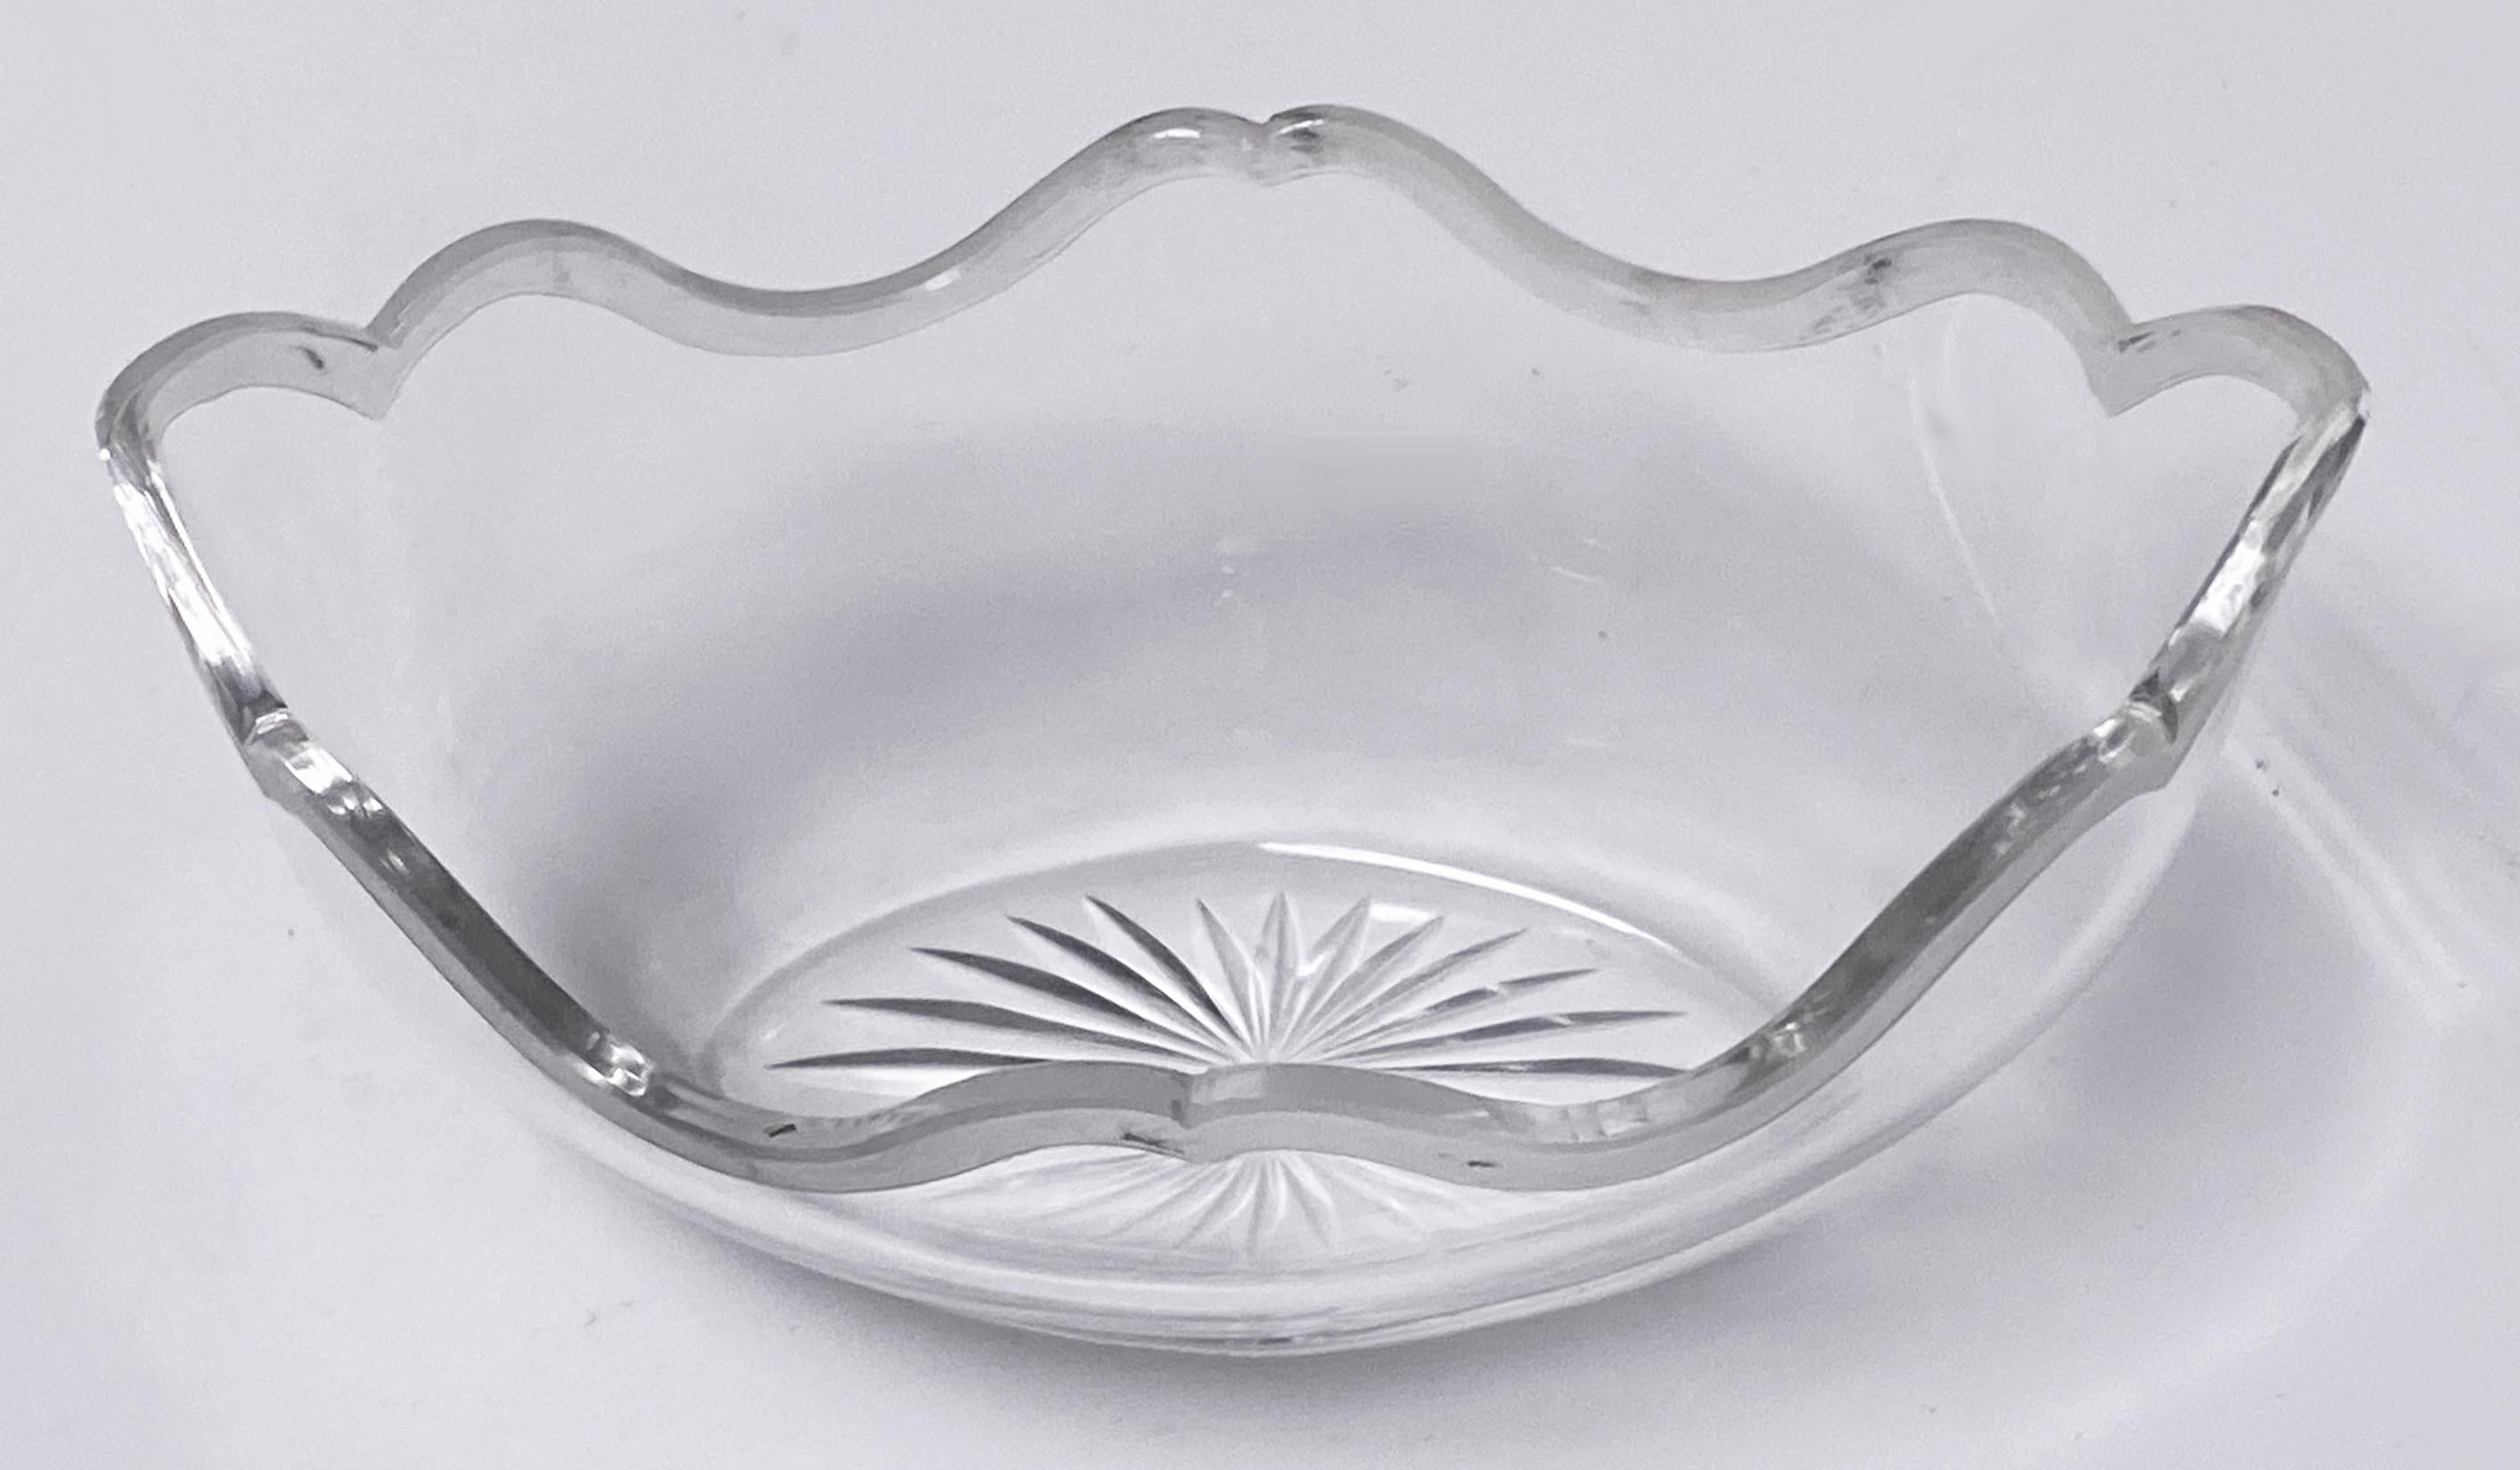 Art Nouveau Silver and glass dish, C.1890 E. Schurmann & Co. Frankfurt, Germany. 4